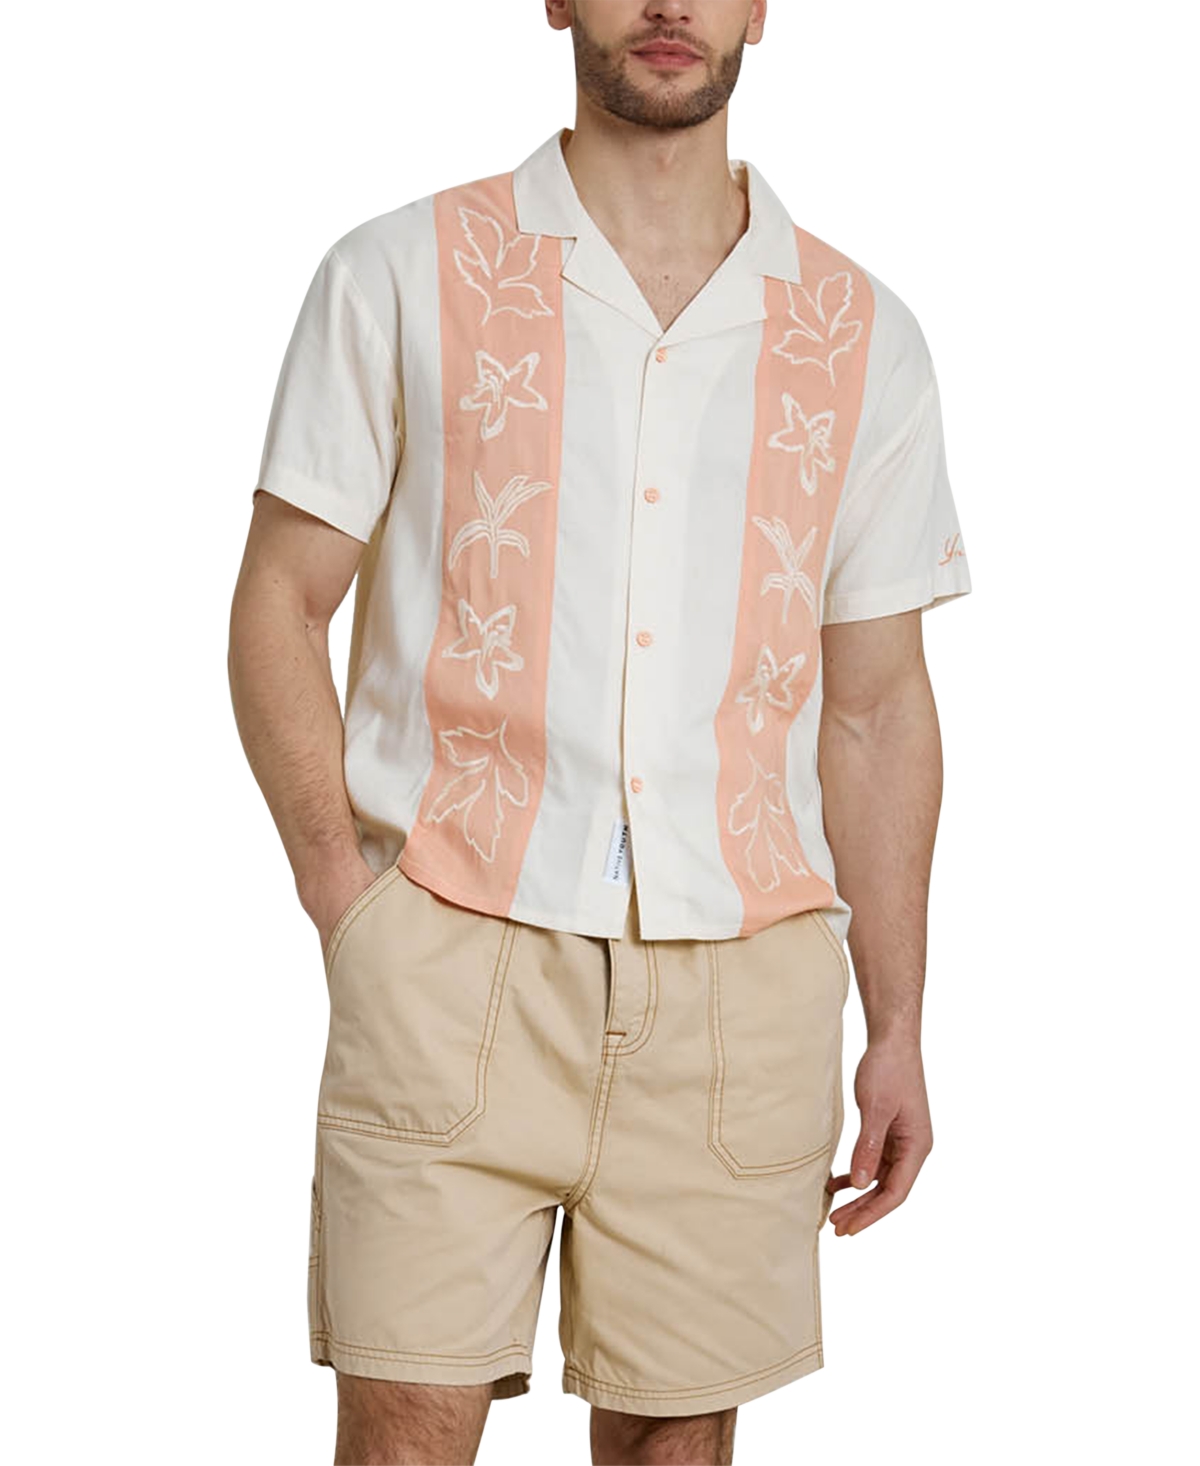 Men's Boxy-Fit Floral Graphic Shirt - Peach